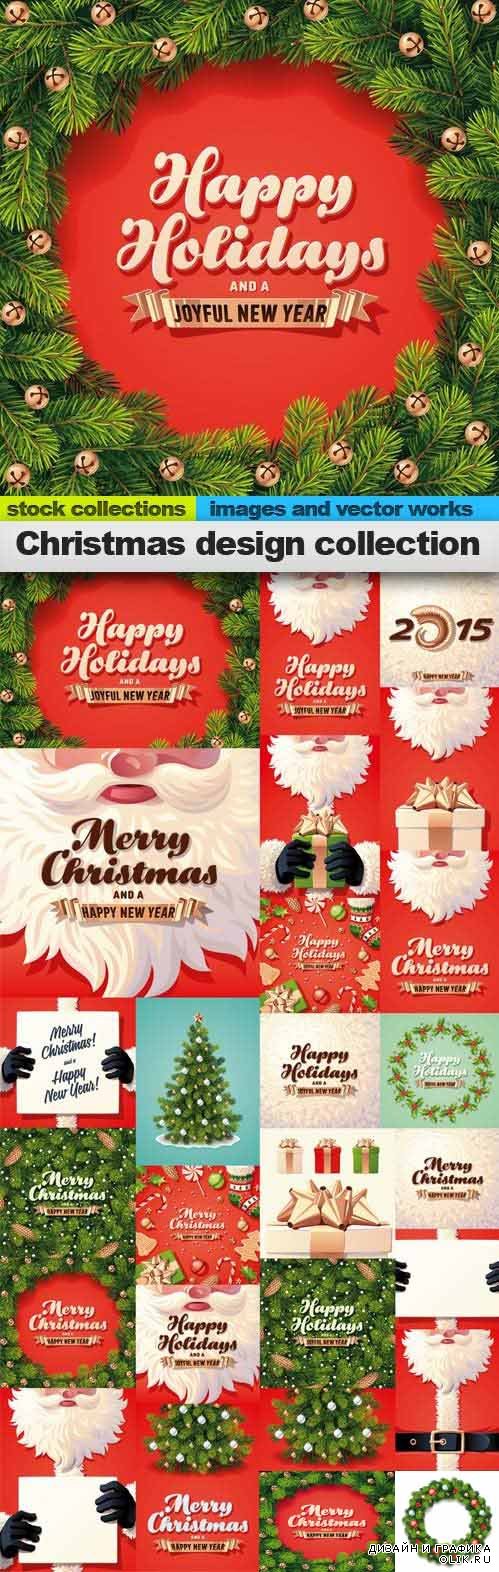 Christmas design collection